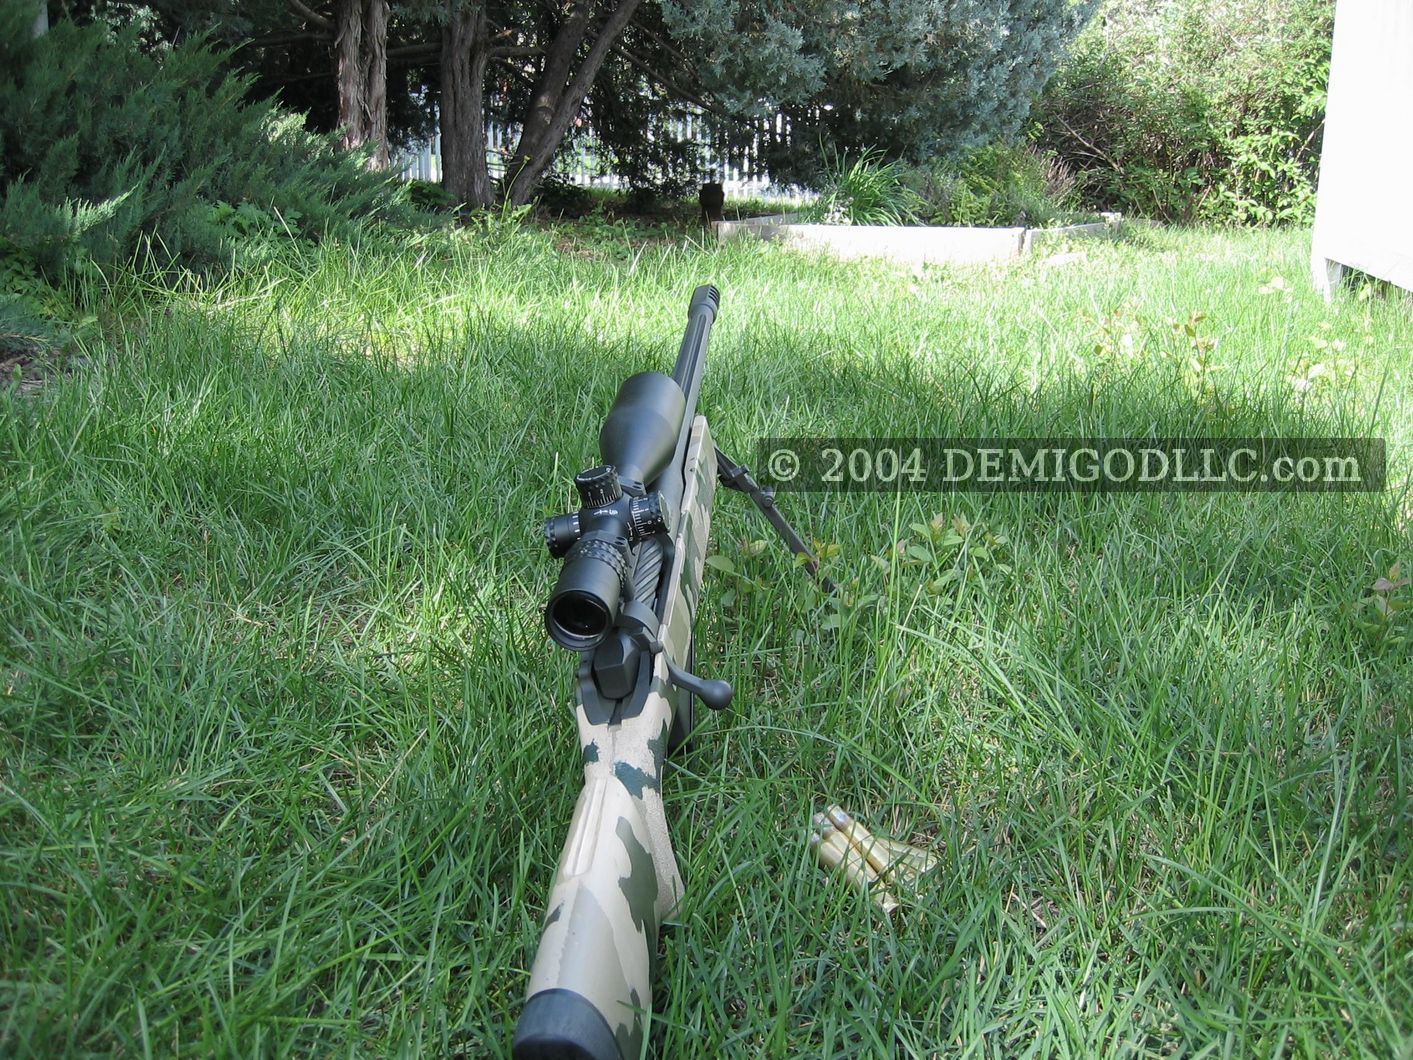 GA Precision McBros 50BMG Rifle
, photo 